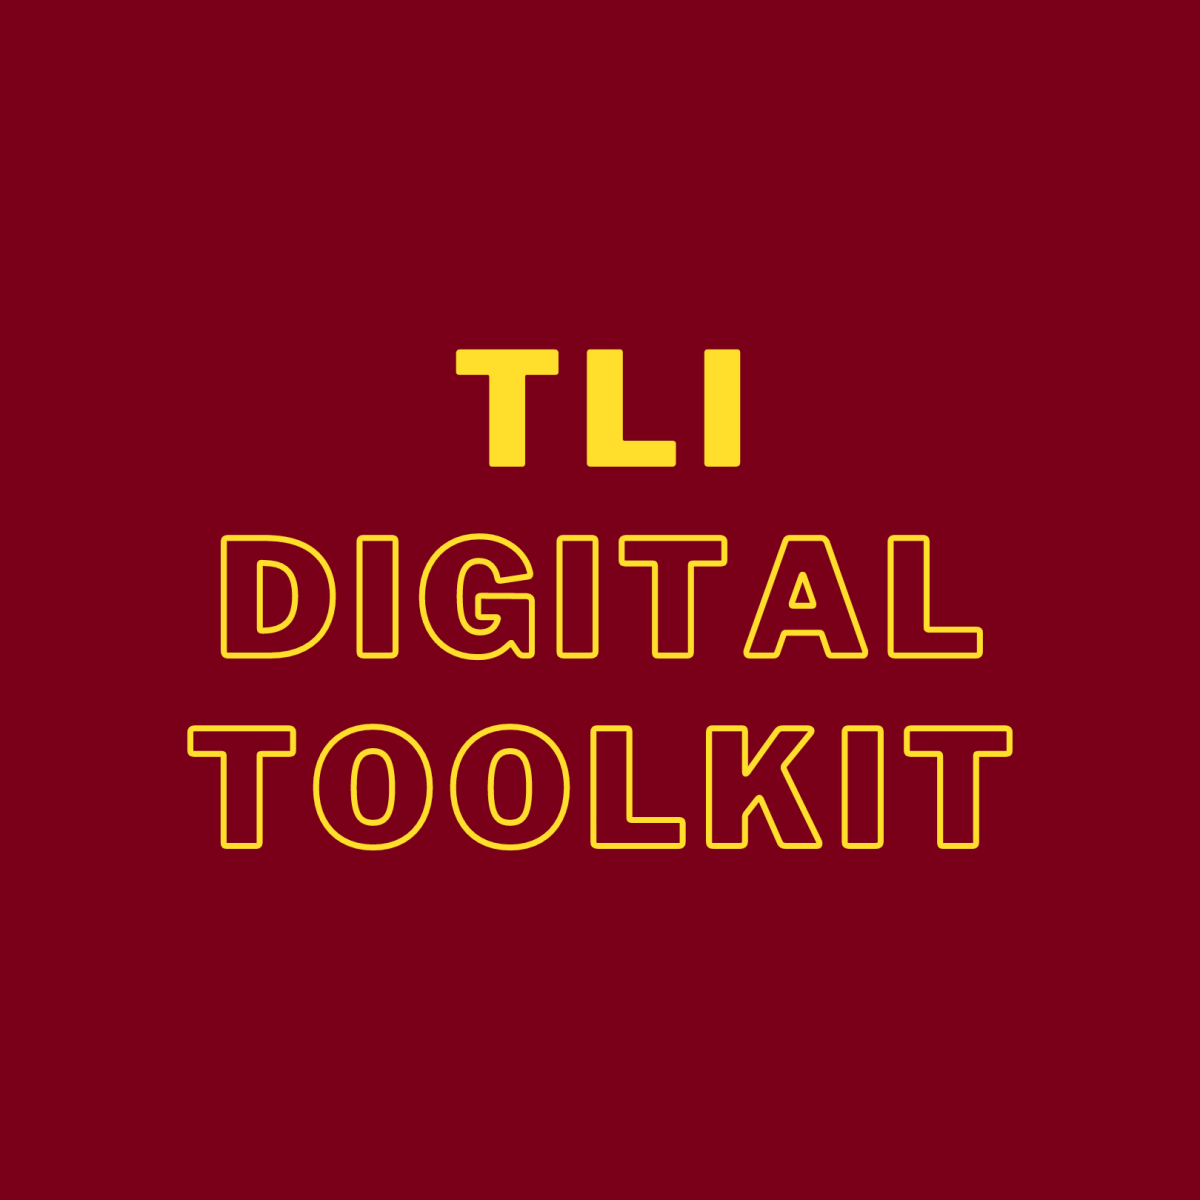 TLI digital toolkit cover.png